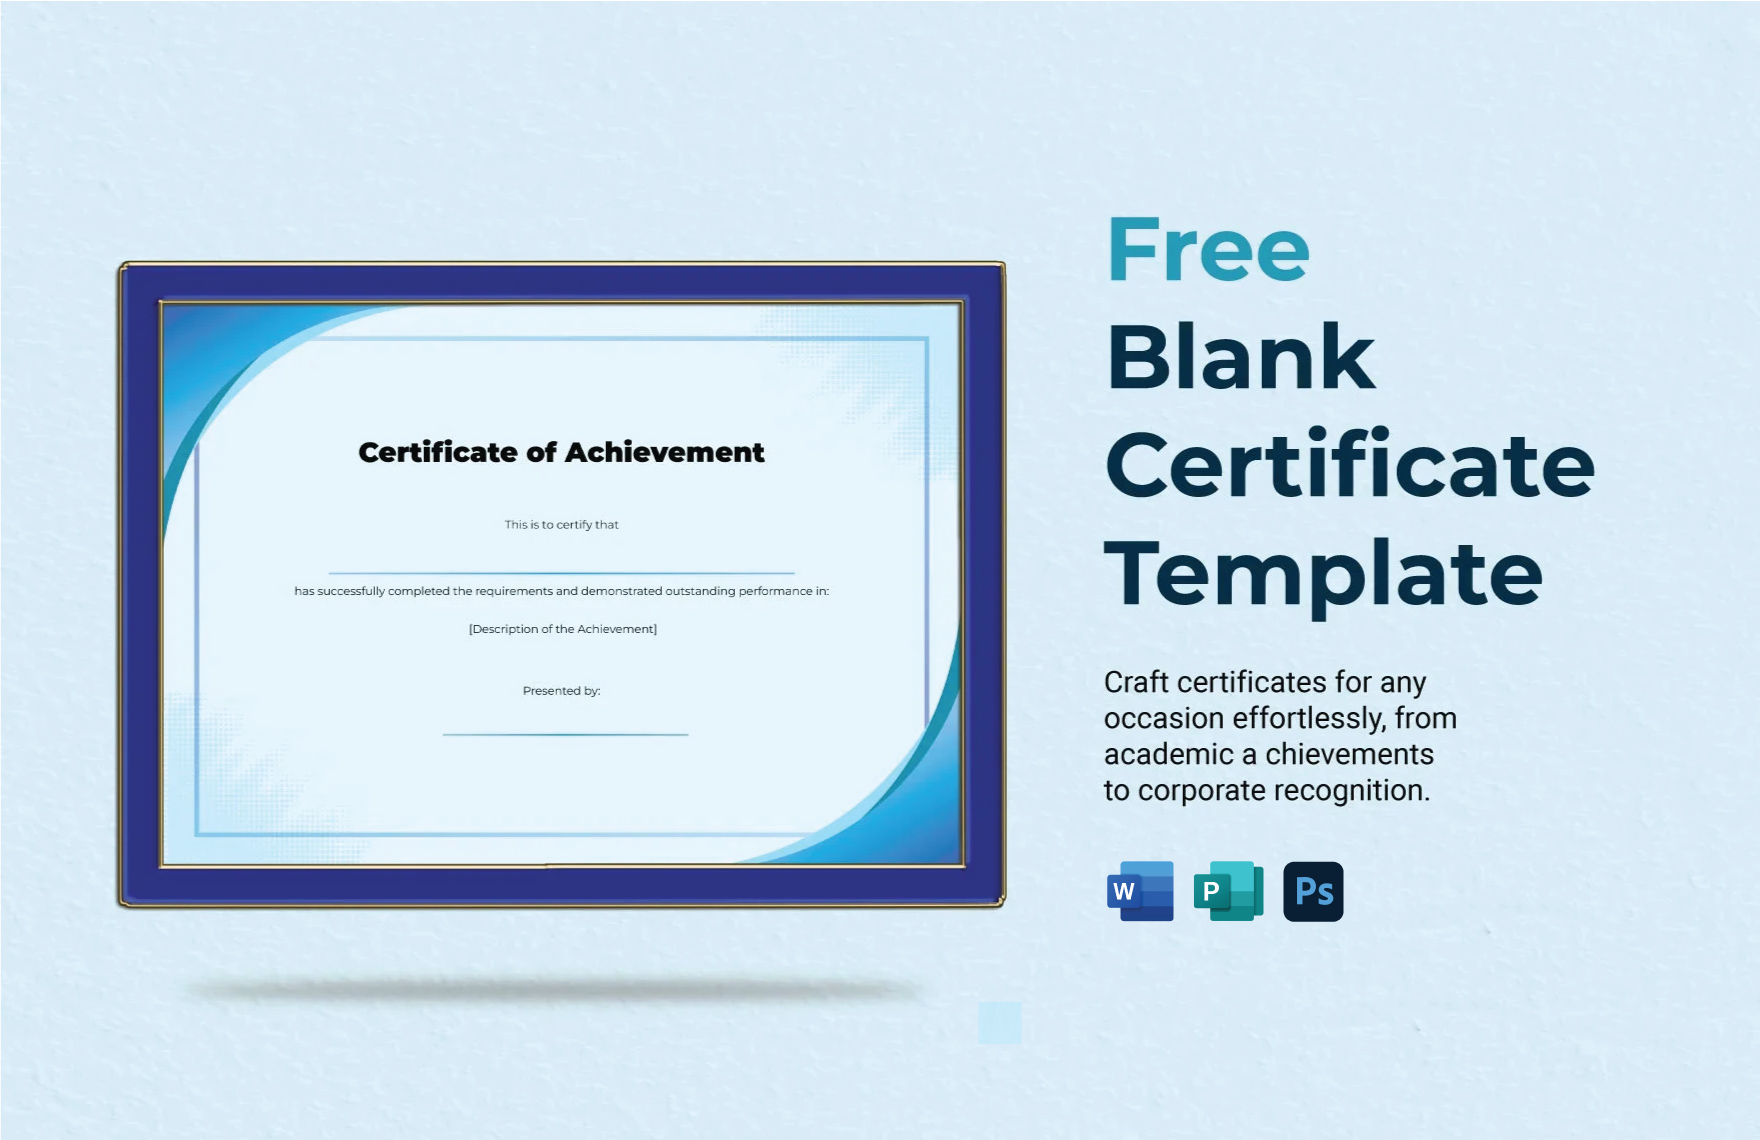 Free Blank Certificate Template